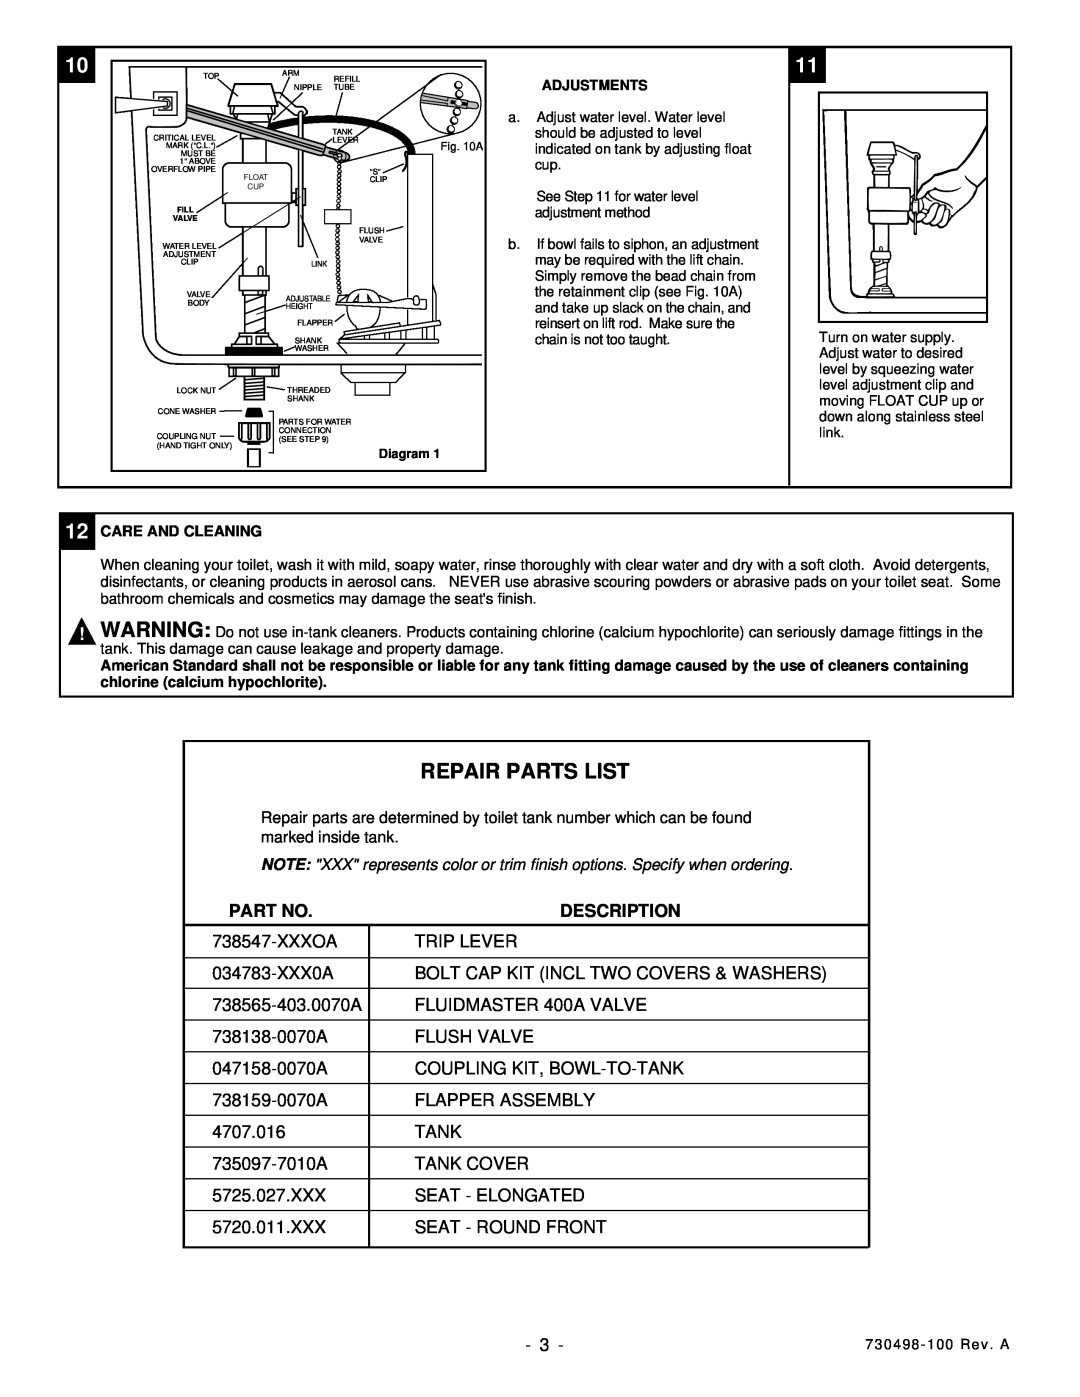 American Standard 2787 installation instructions Repair Parts List, Description 